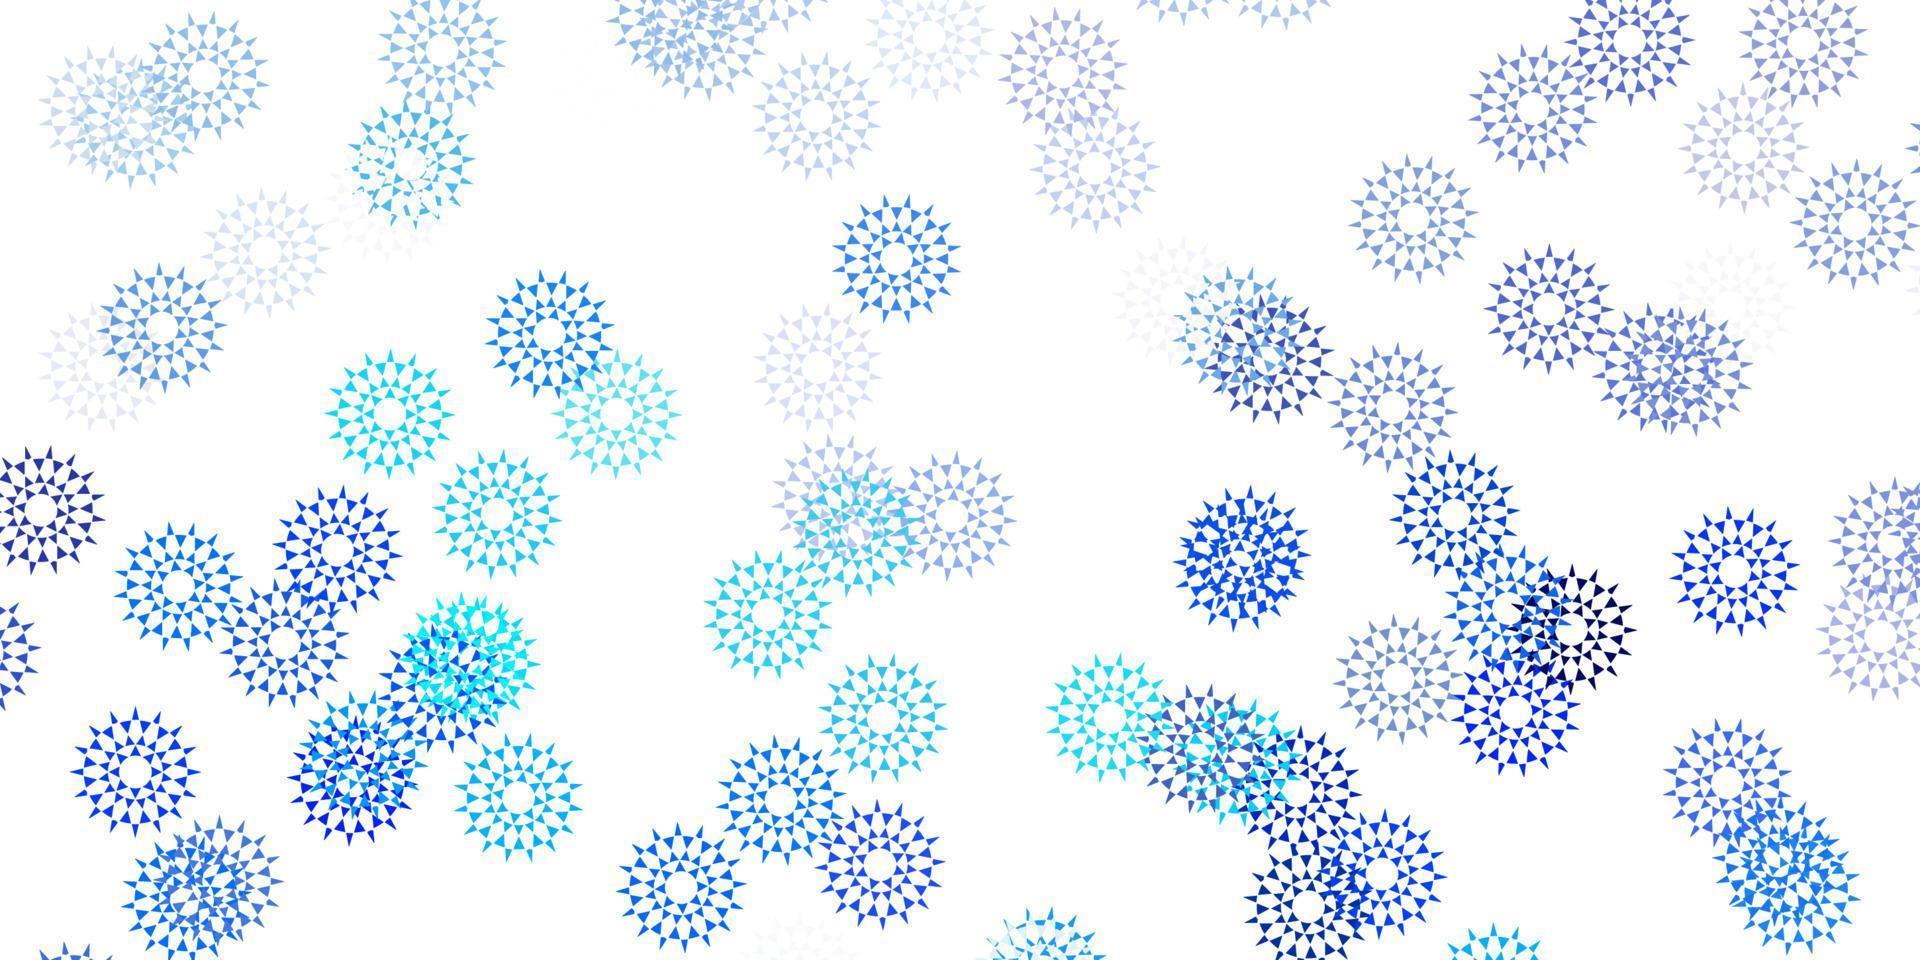 ljusblå vektor doodle mönster med blommor.